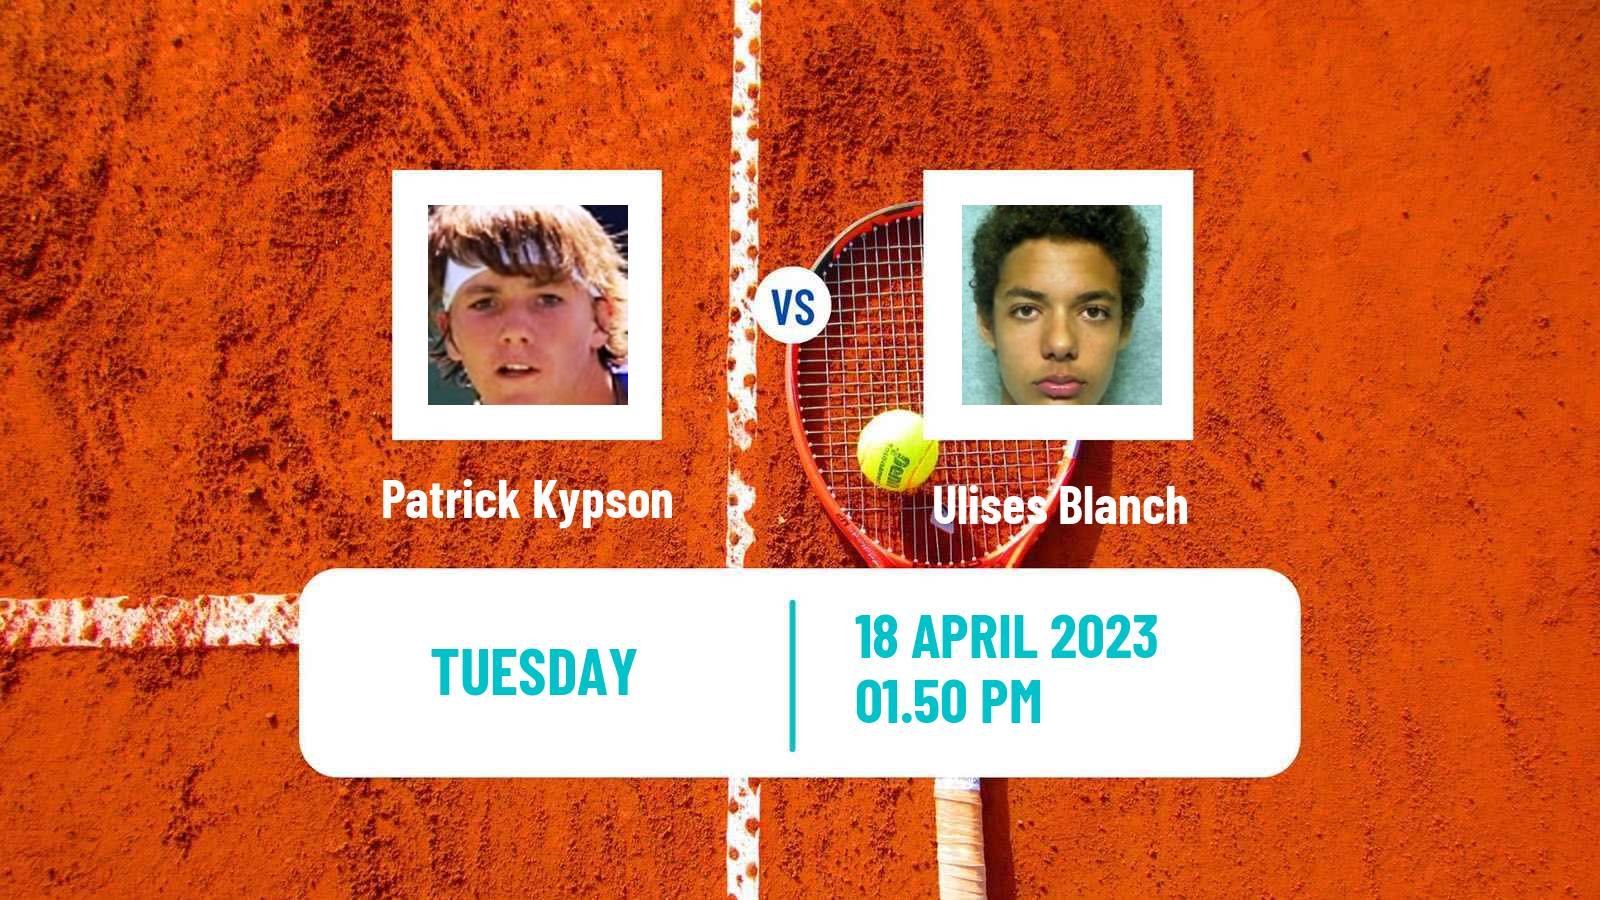 Tennis ATP Challenger Patrick Kypson - Ulises Blanch